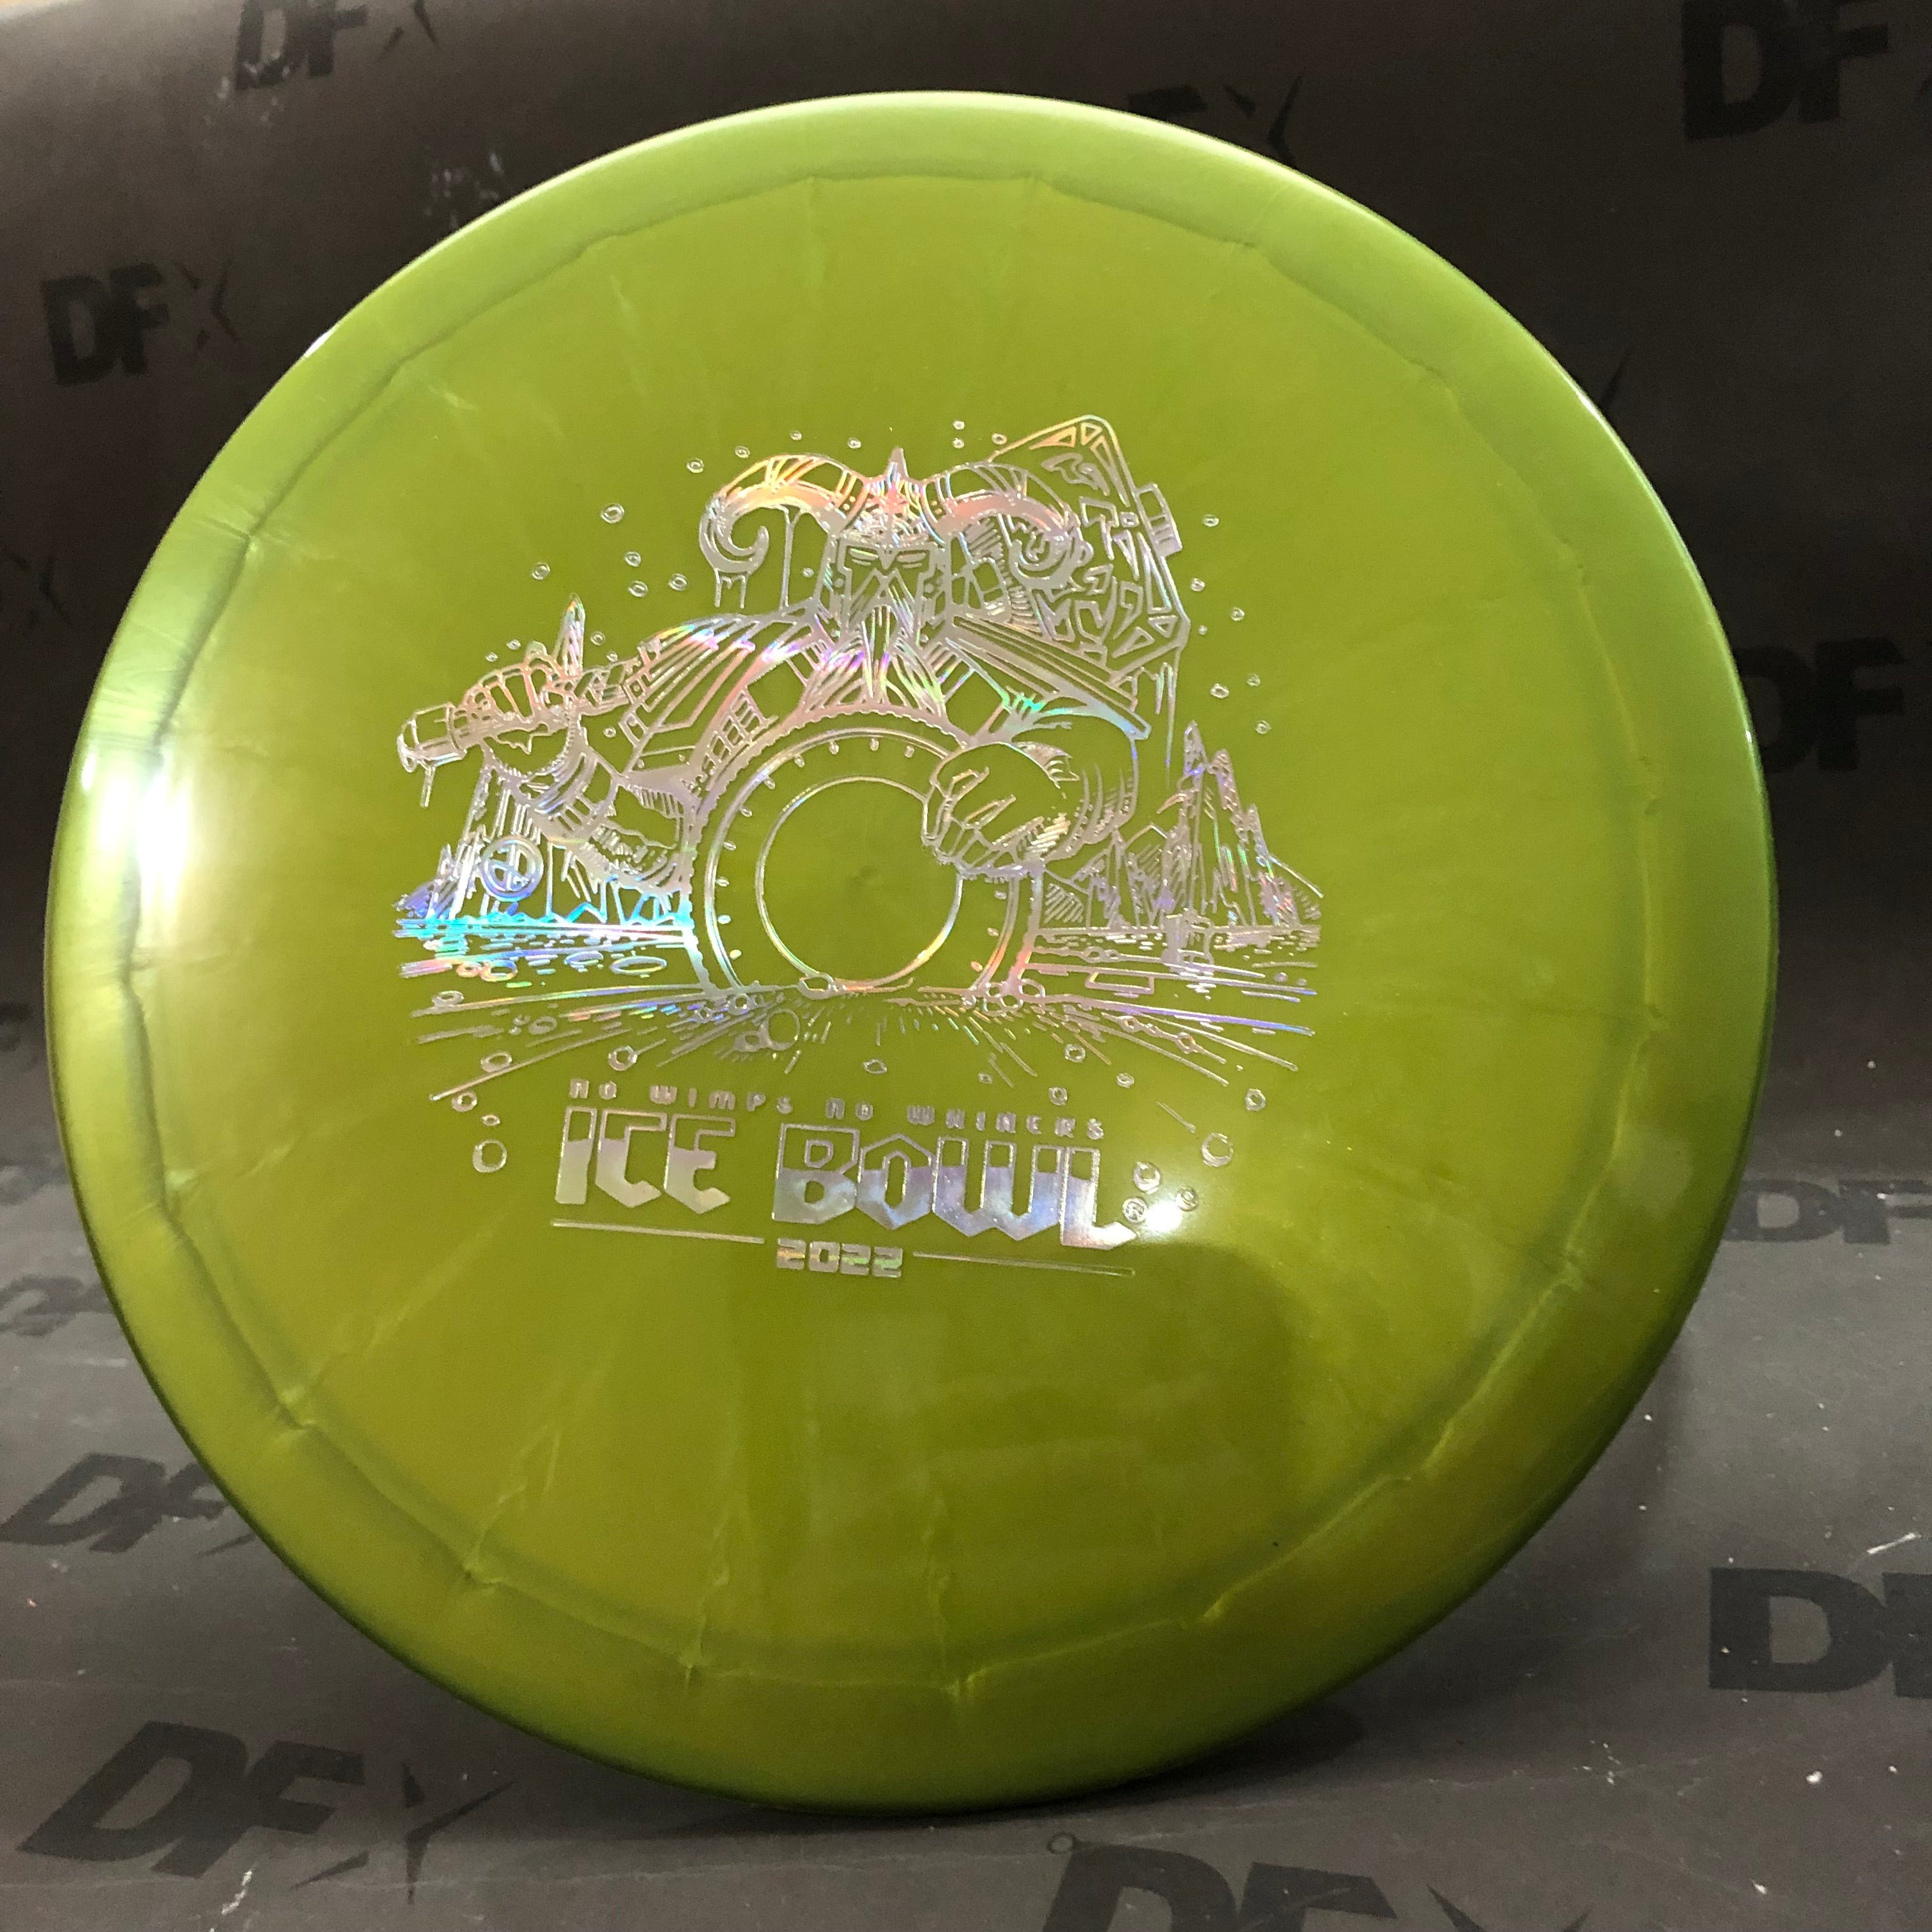 Mint Sublime Alpha - Ice Bowl 2022